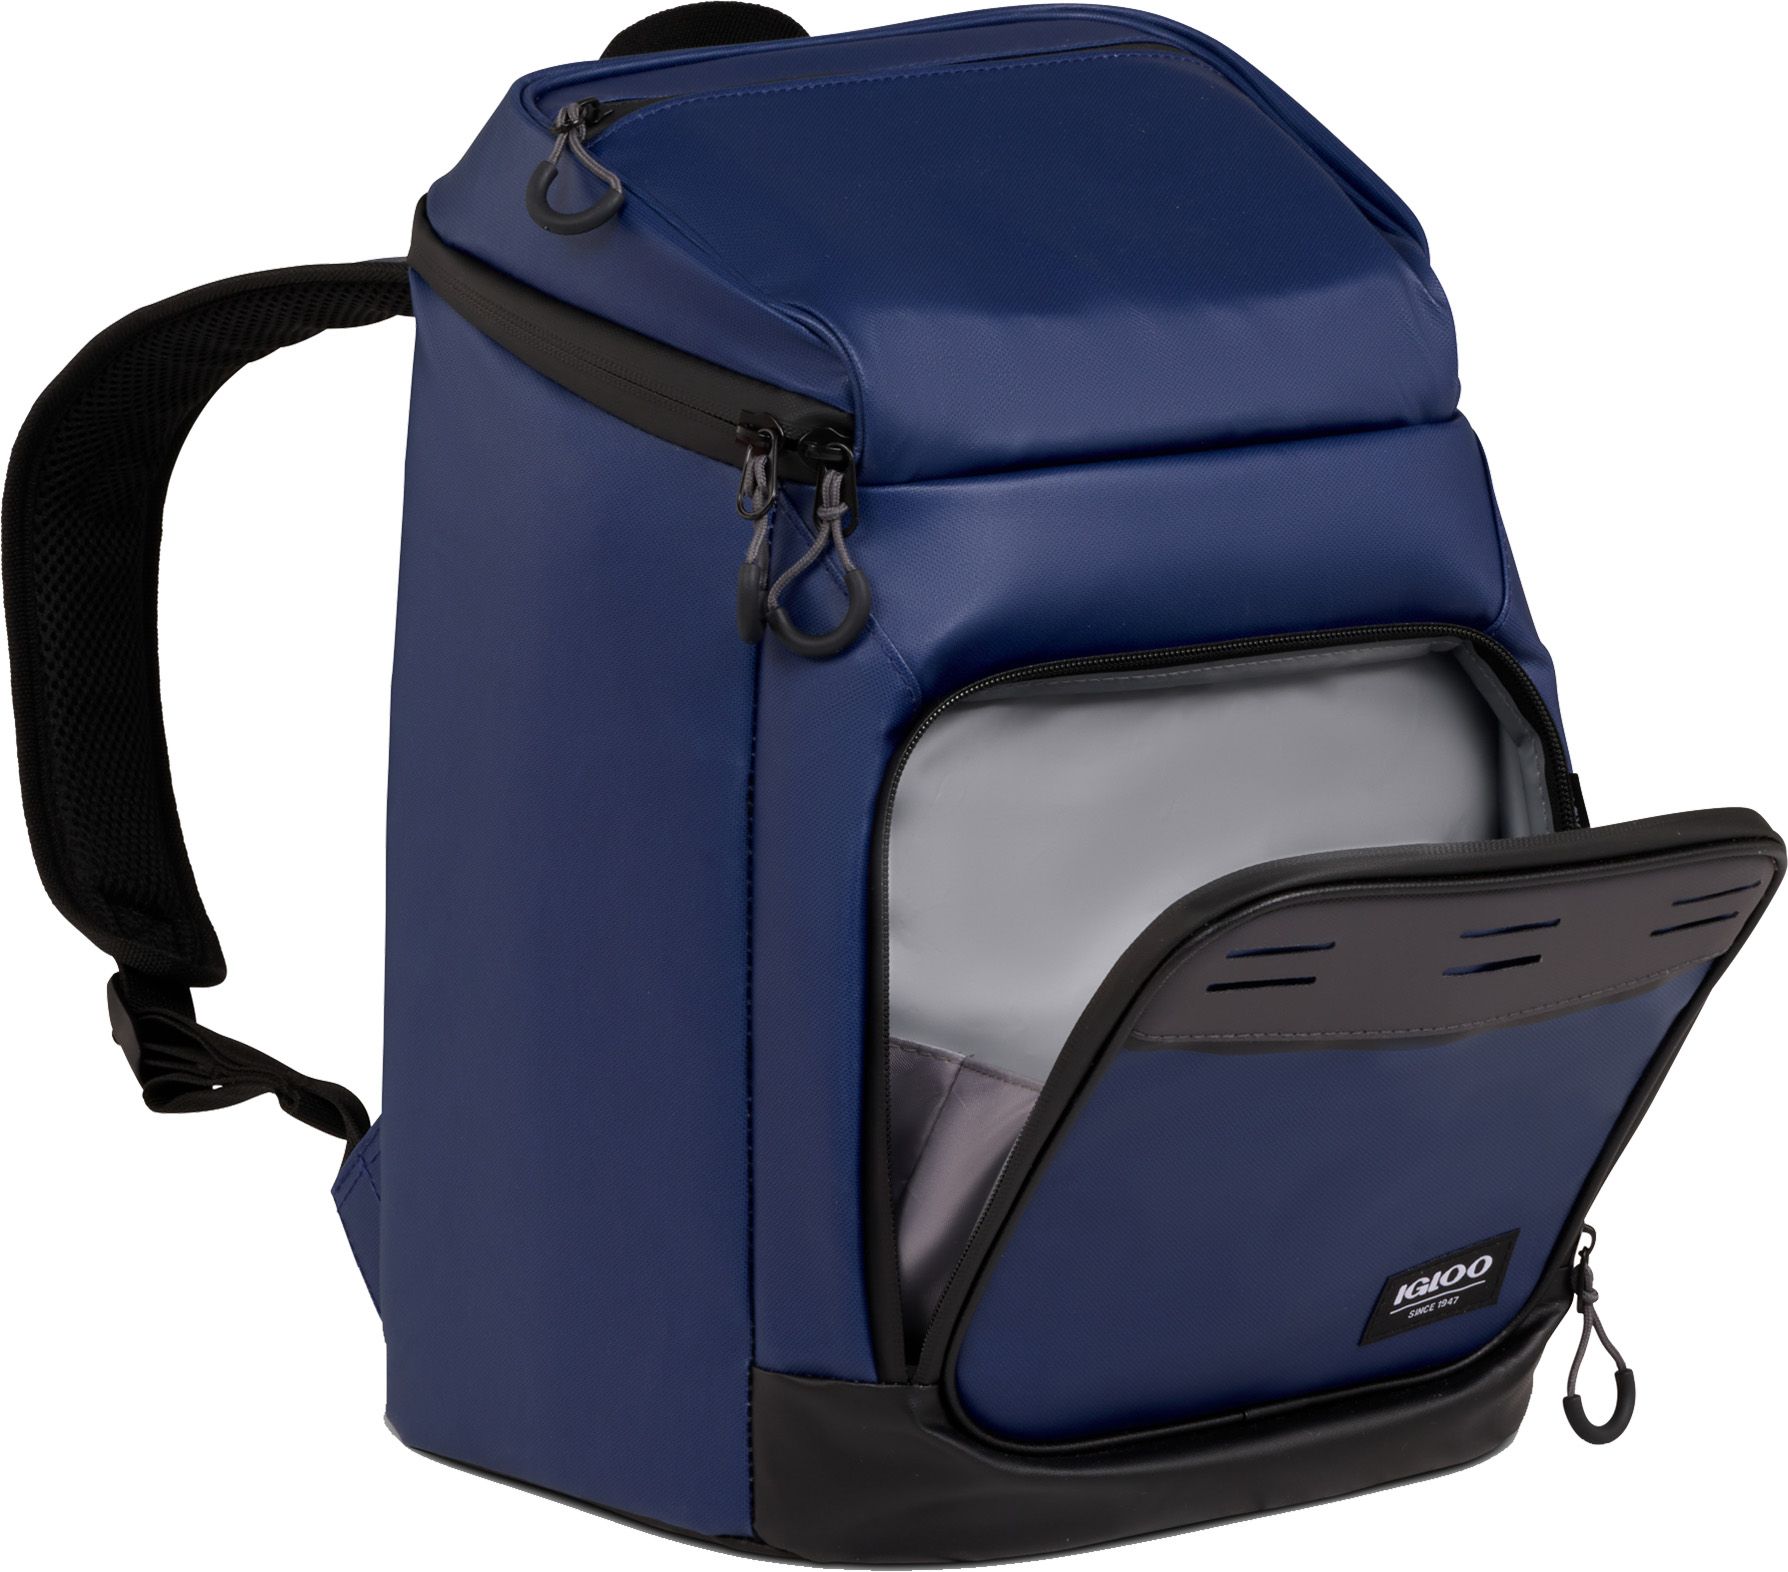 Igloo Vantage 18 Can Backpack Cooler